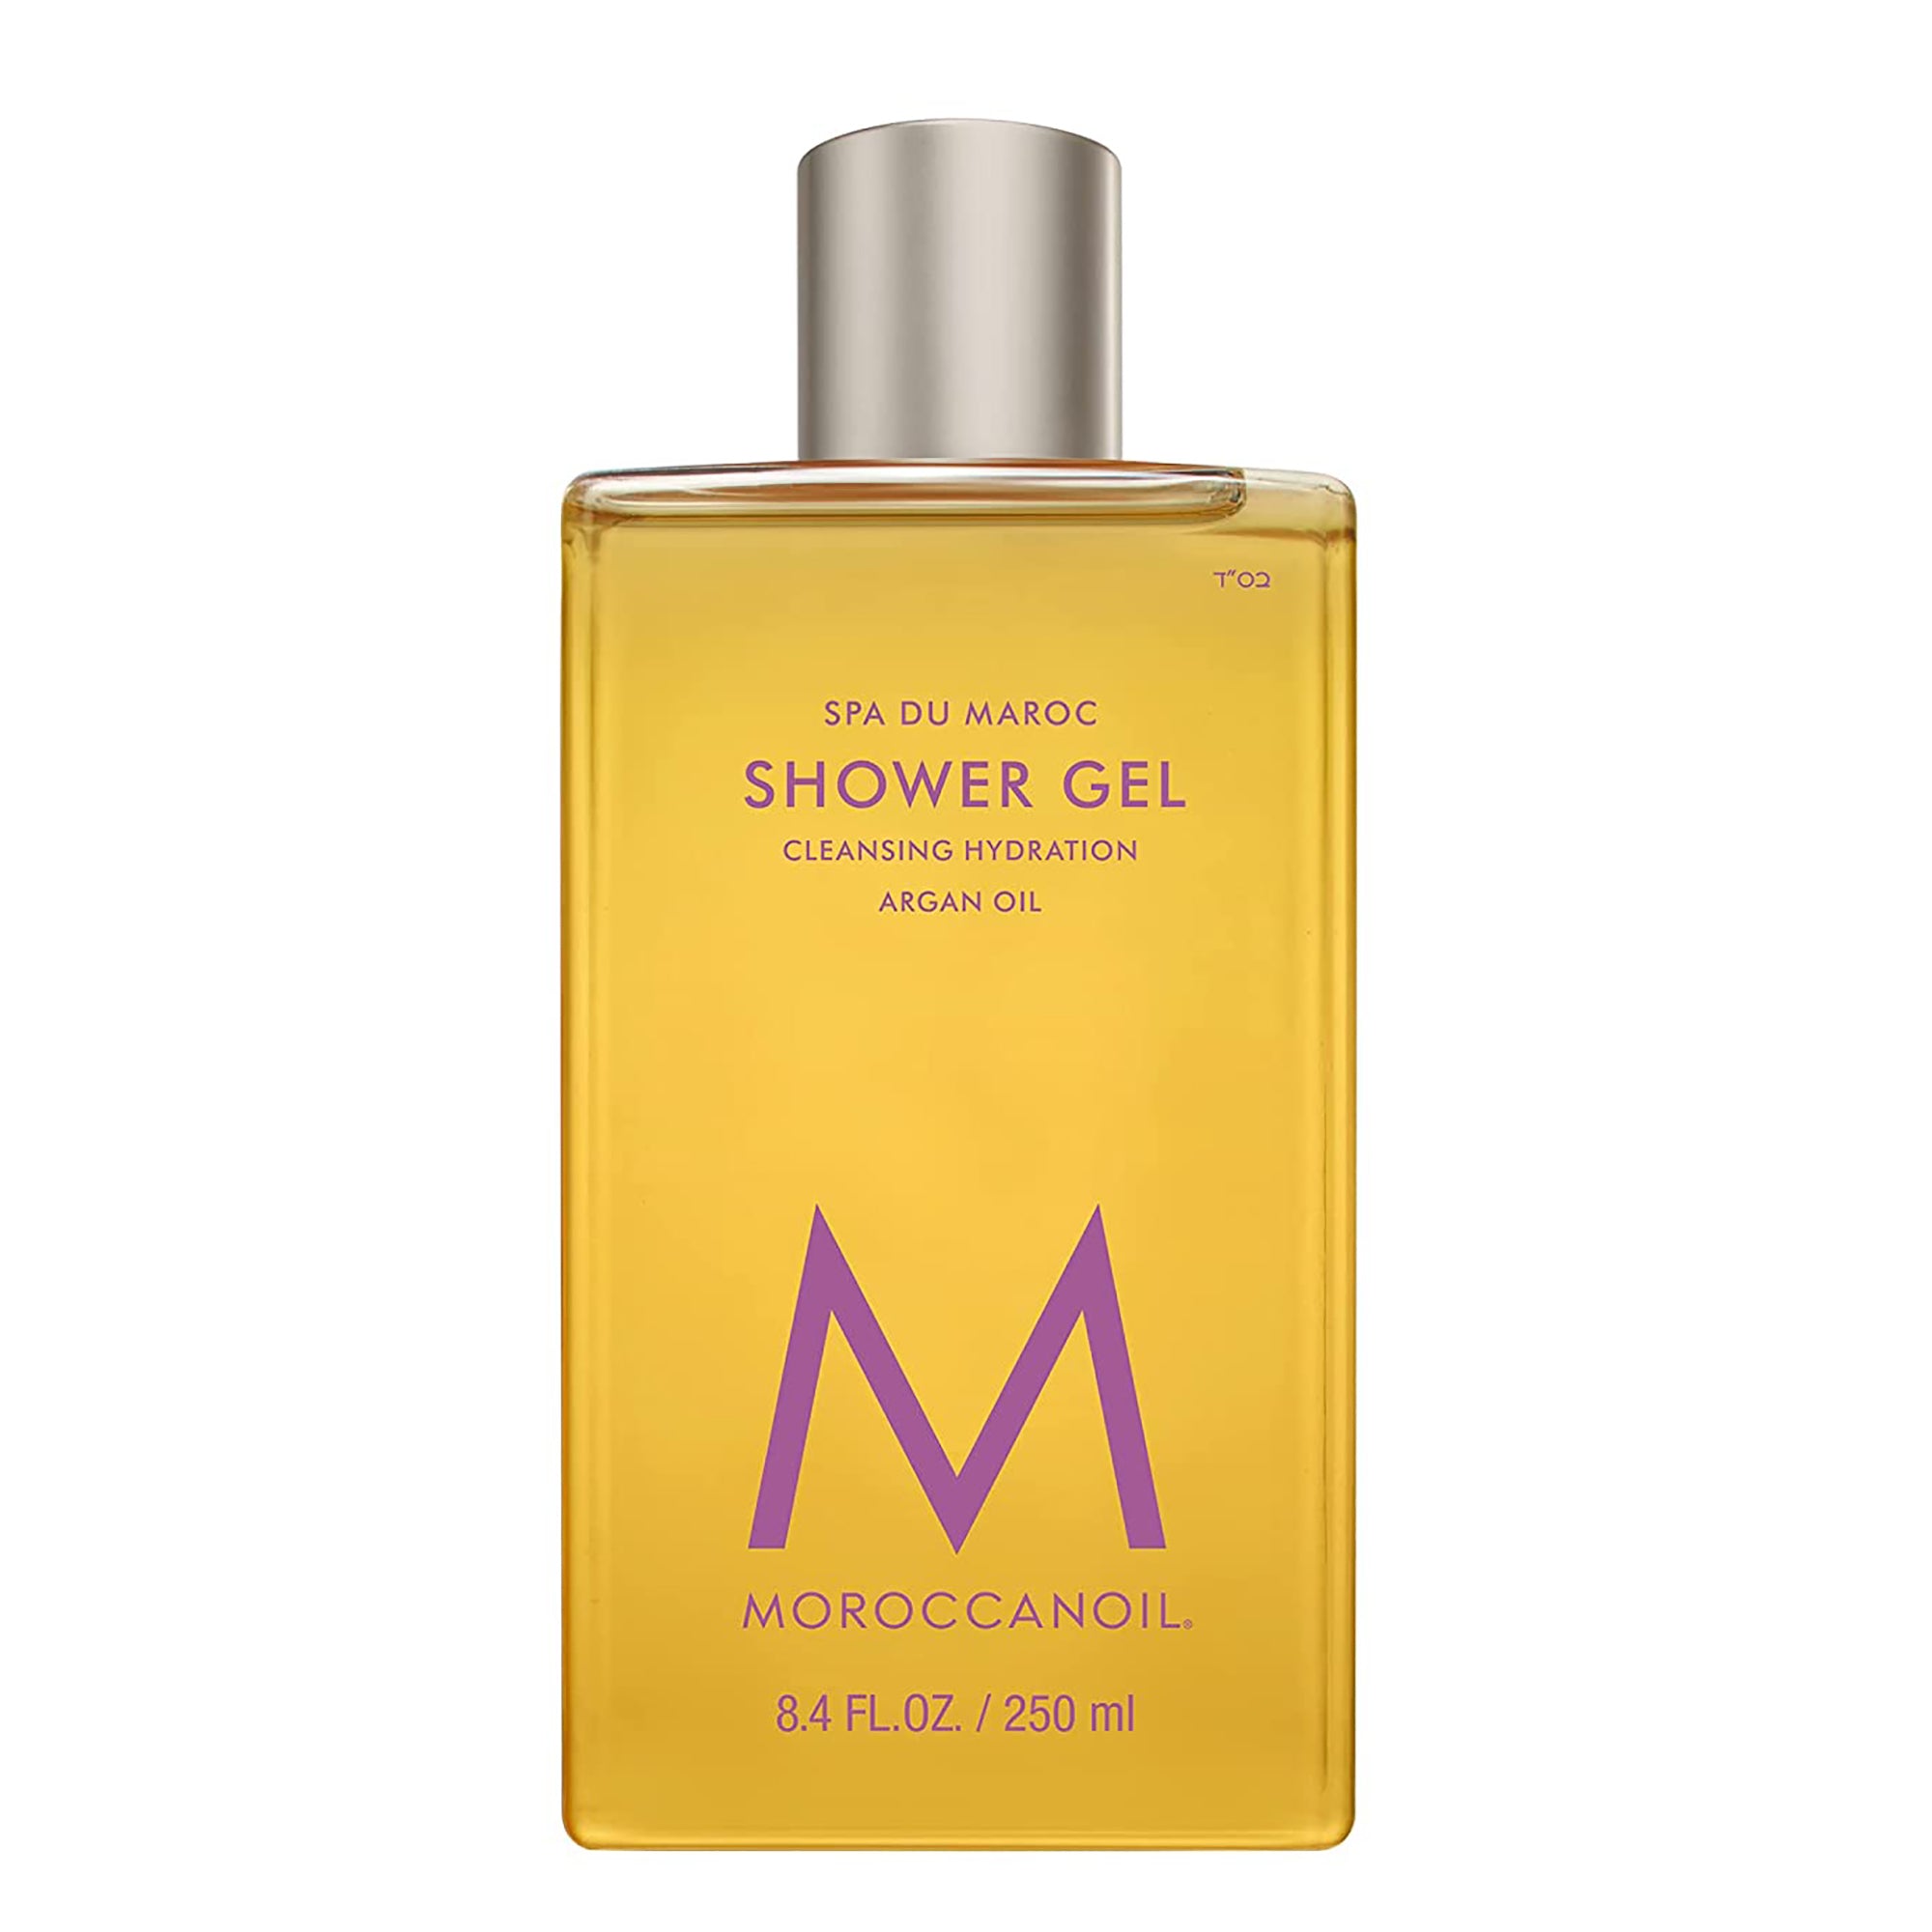 Moroccanoil Shower Gel - Spa du Maroc / 8OZ